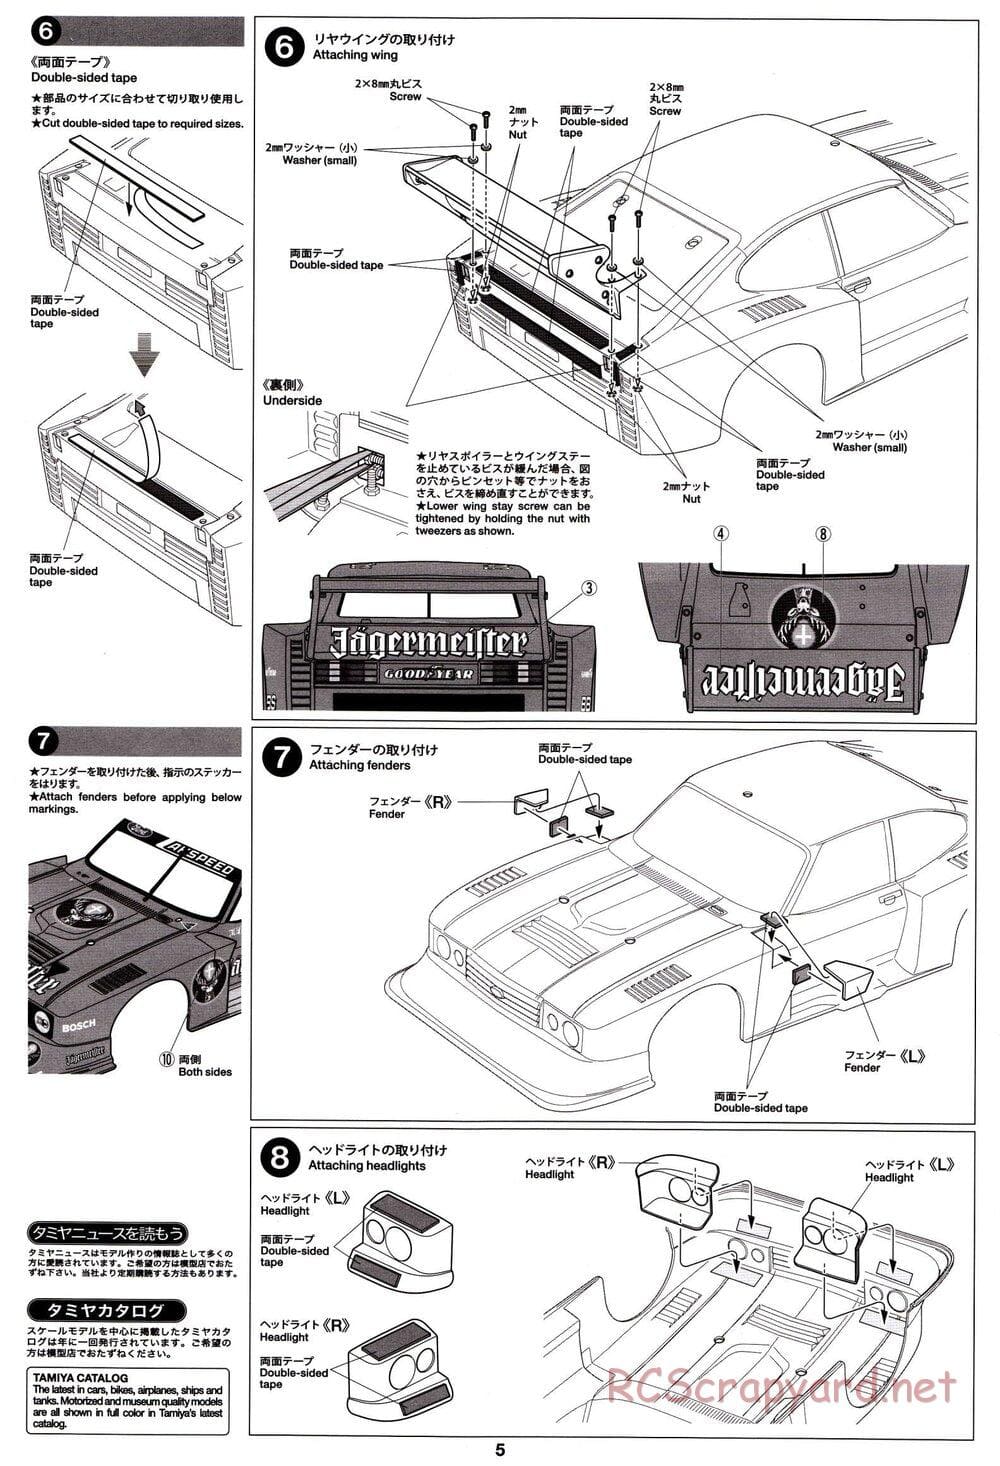 Tamiya - Zakspeed Jgermeister Ford Capri Turbo Gr.5 - TT-02 Chassis - Body Manual - Page 5